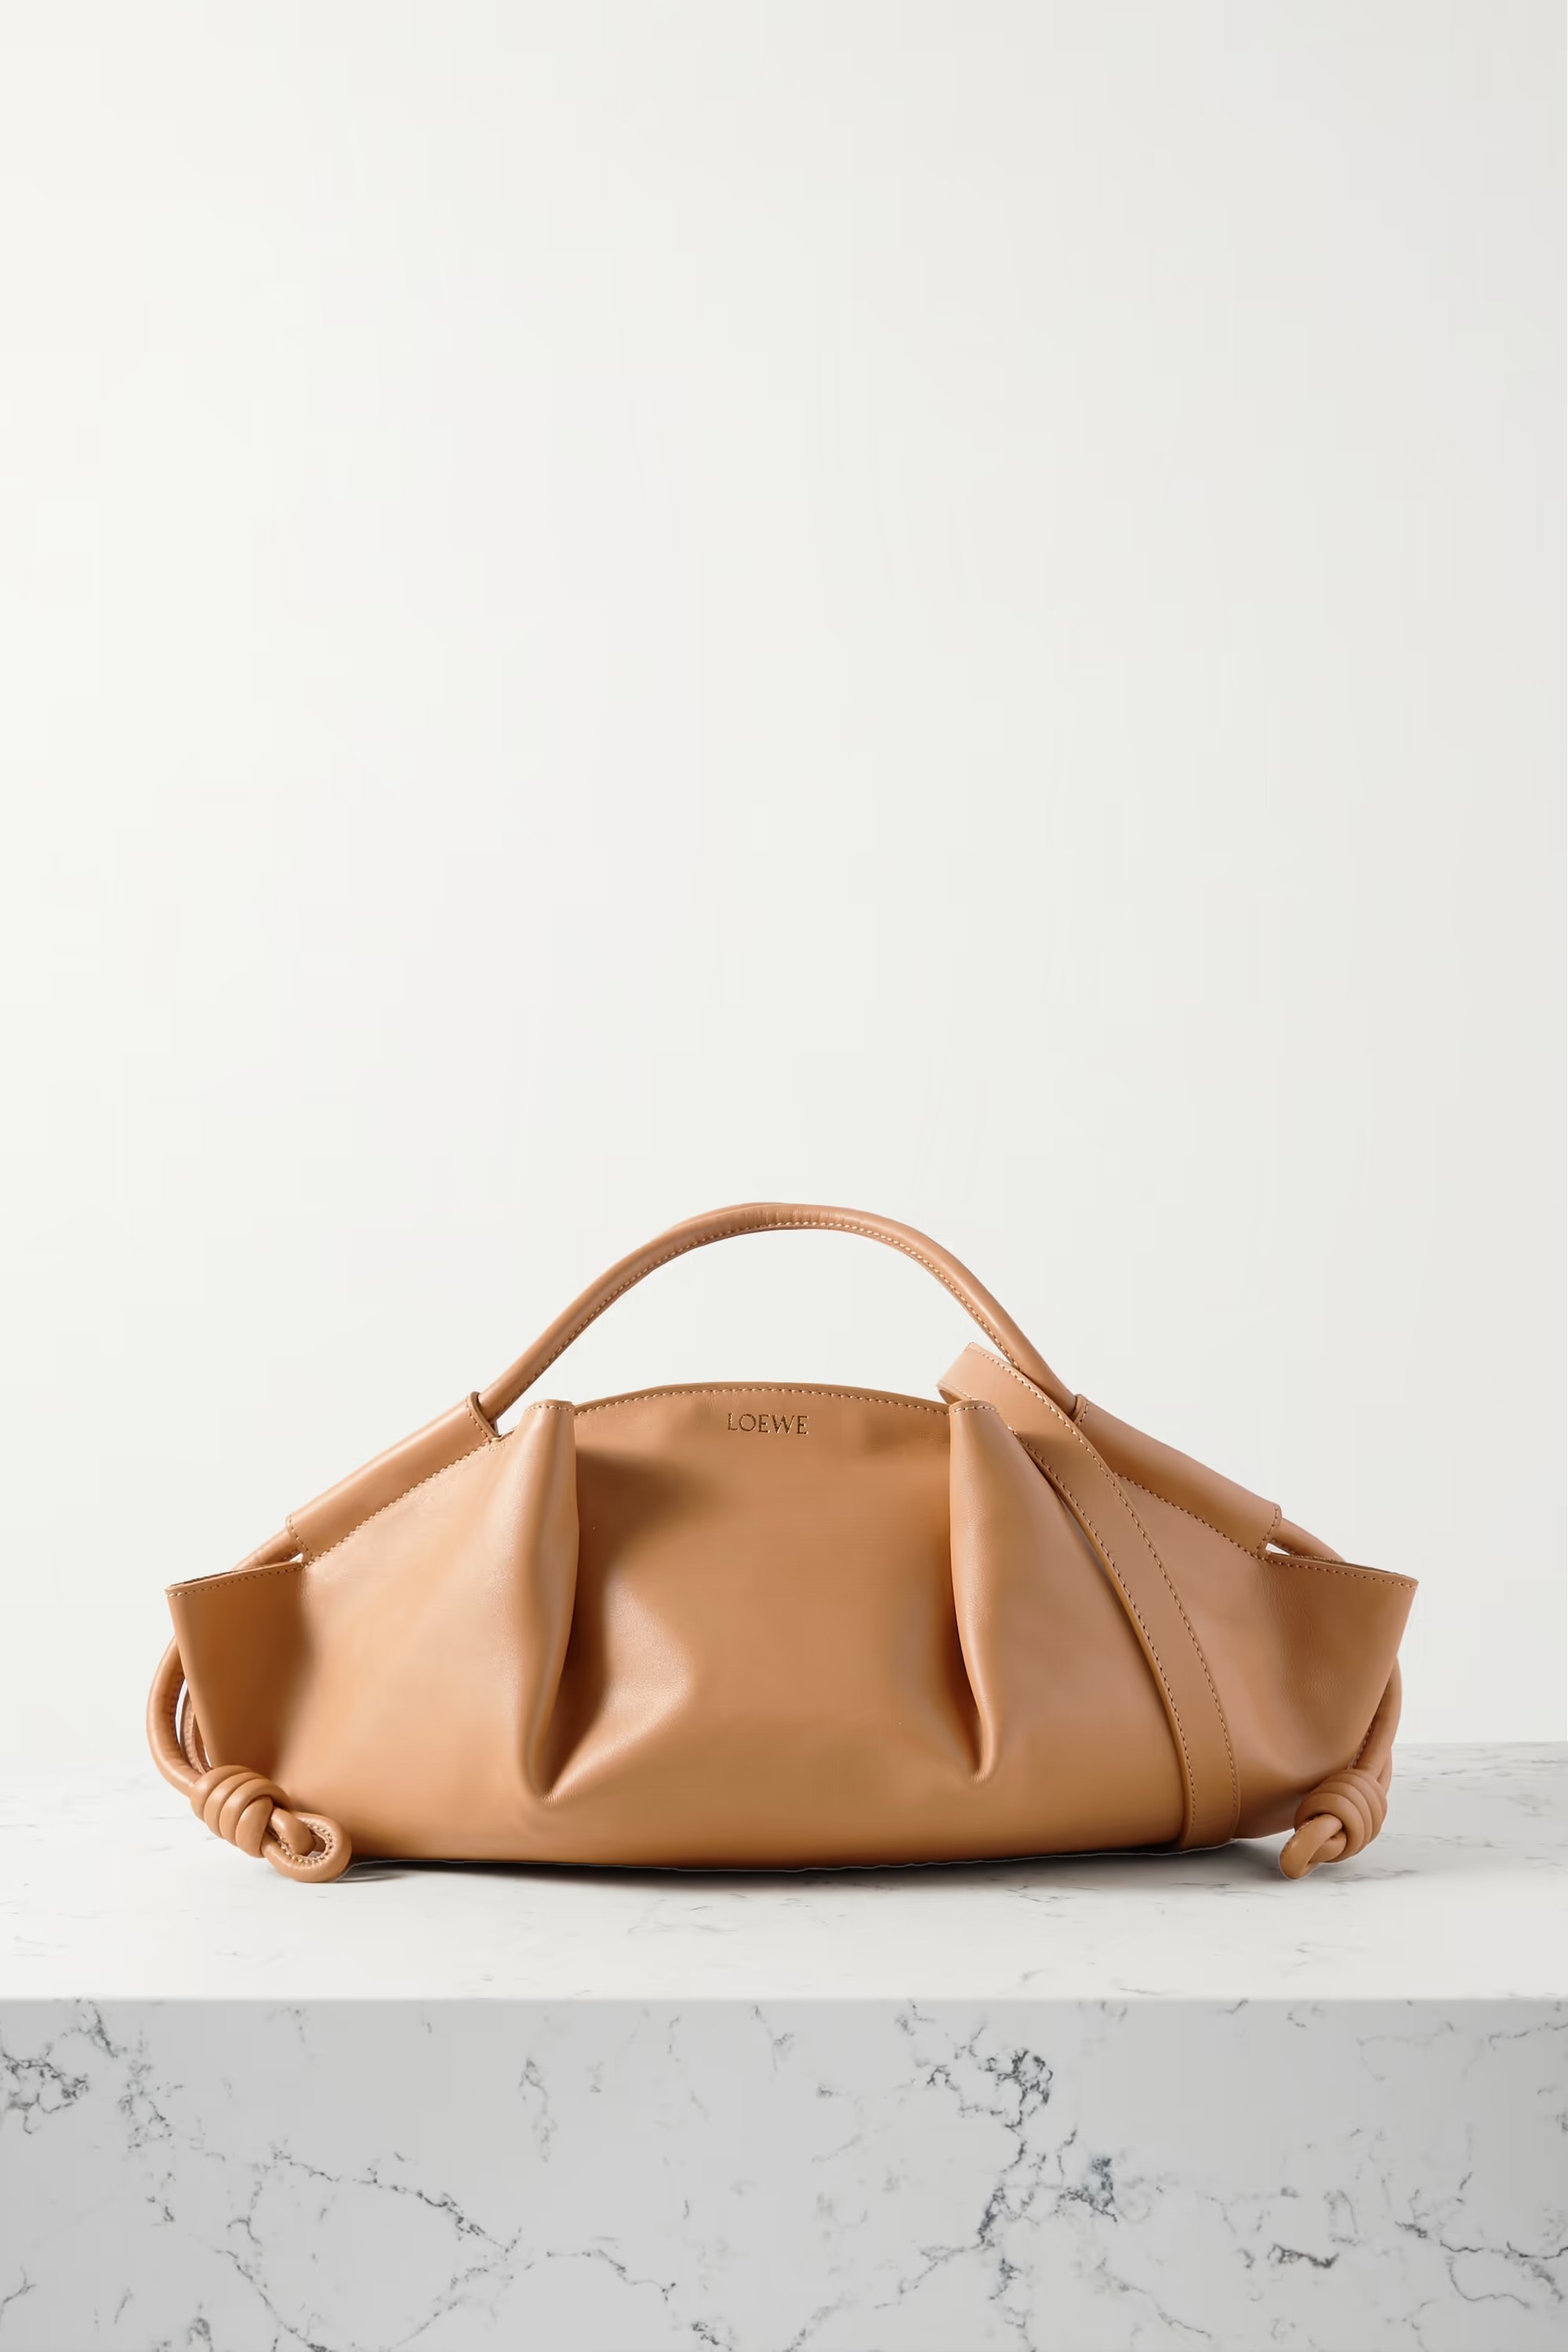 ALAÏA Le Coeur/Heart leather shoulder bag: THE NEXT IT BAG IN 2023